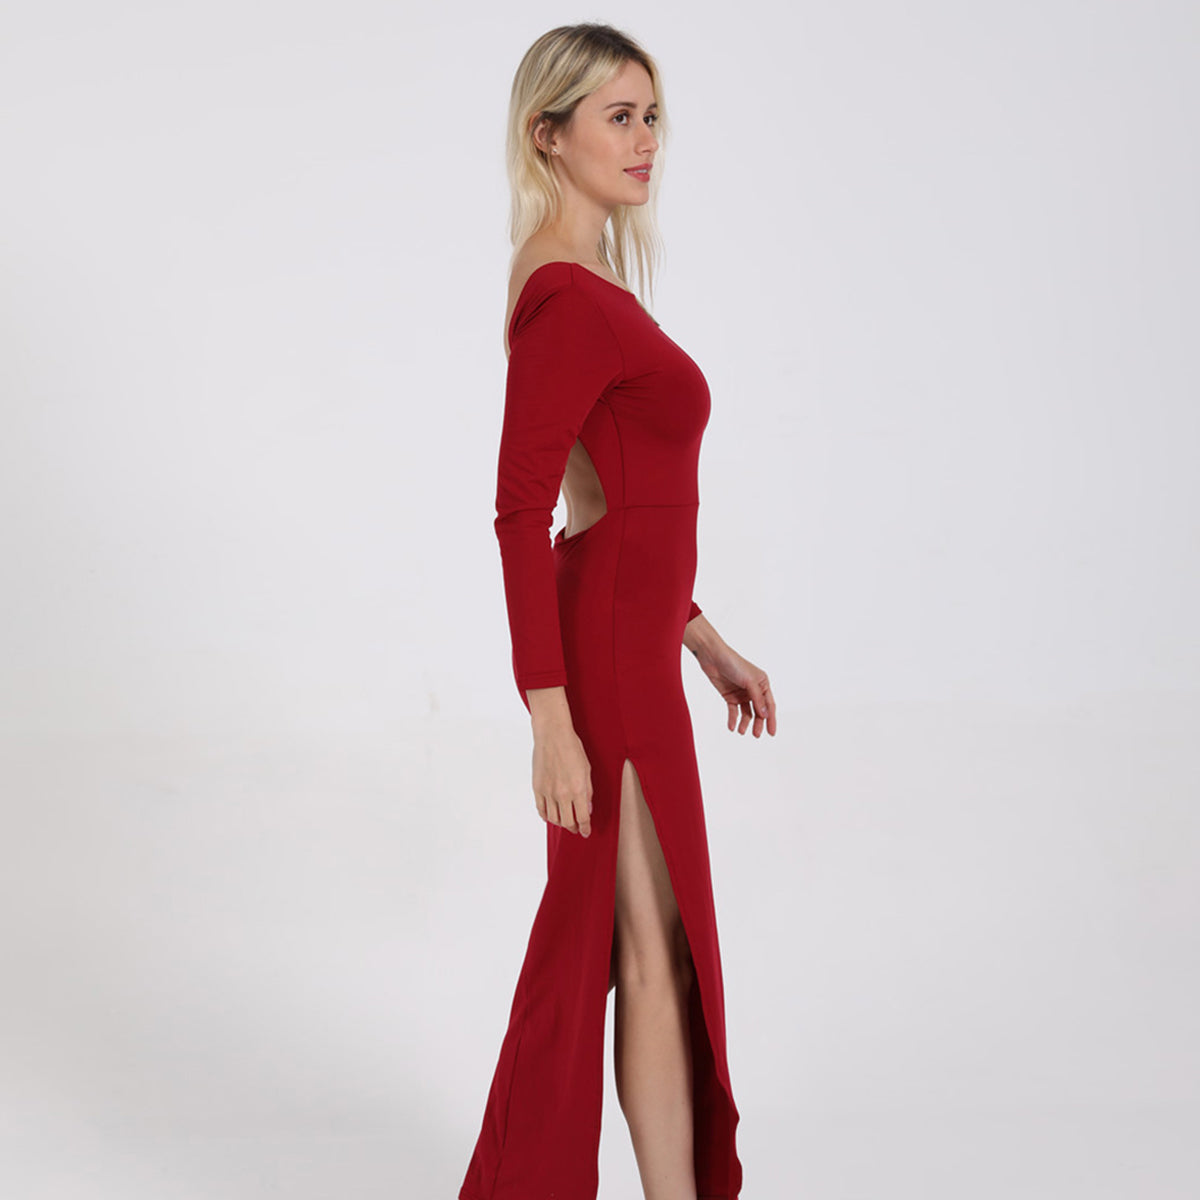 HannaClothingStore HannaClothingStore Women Dress Open back split long sleeve floor dress